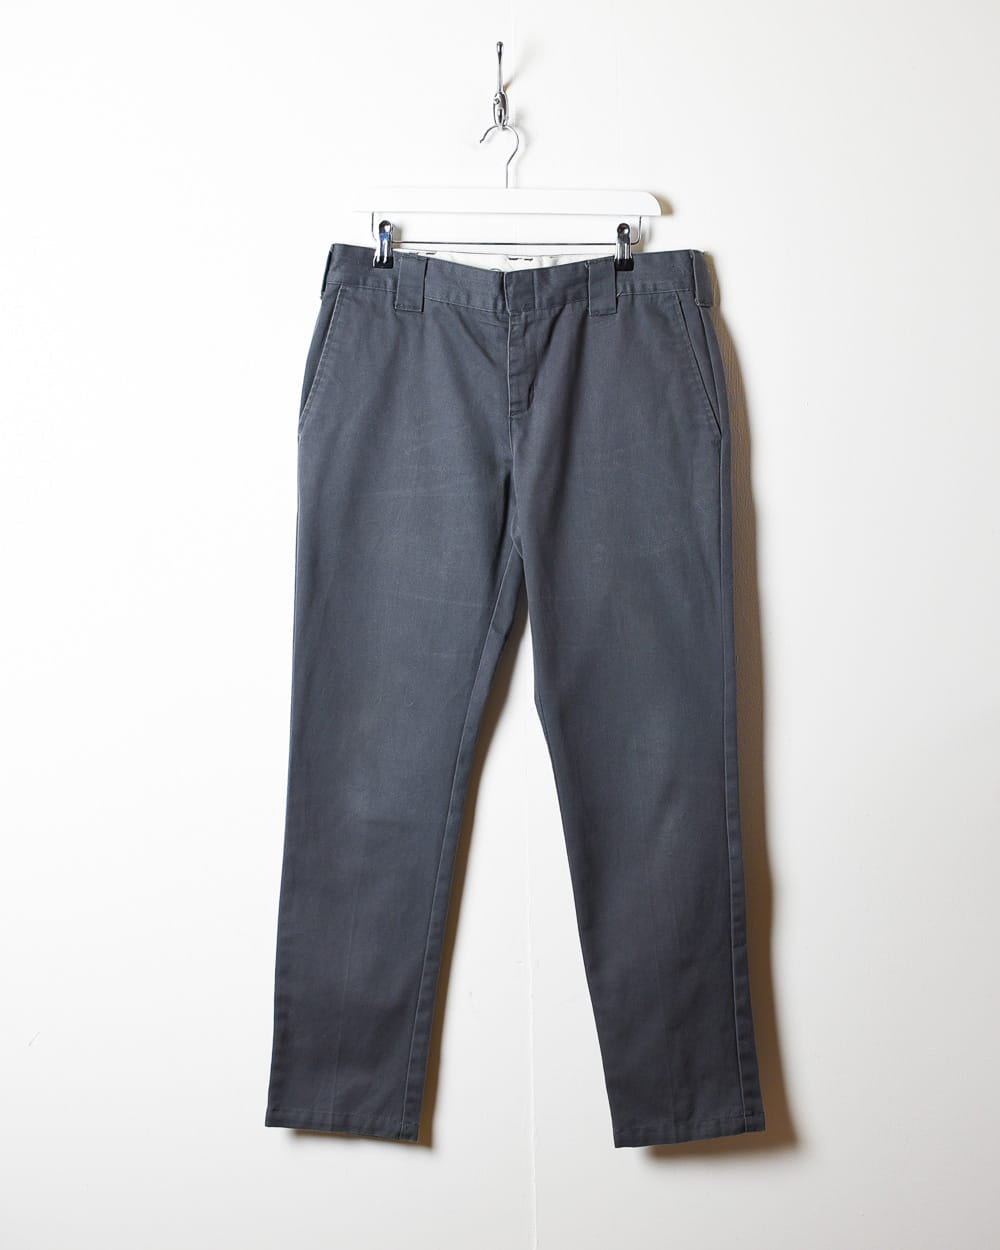 Grey Dickies Slim Fit Trousers - W36 L31